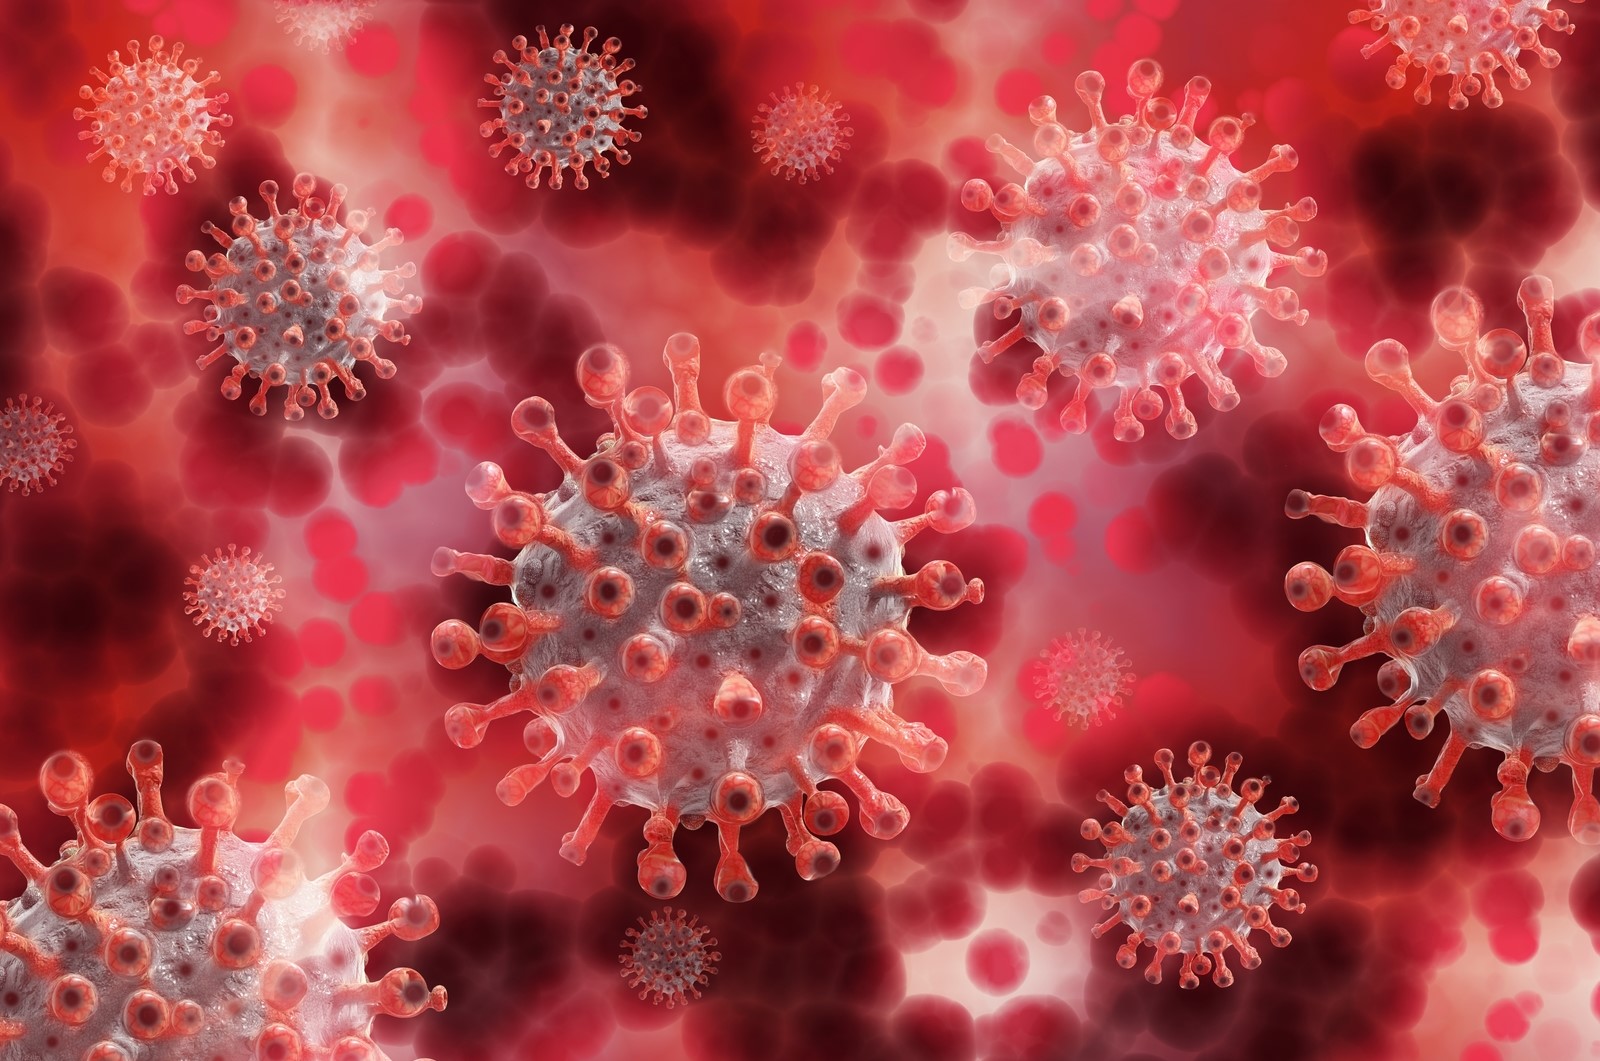 Three Ways to Protect Yourself from Coronavirus